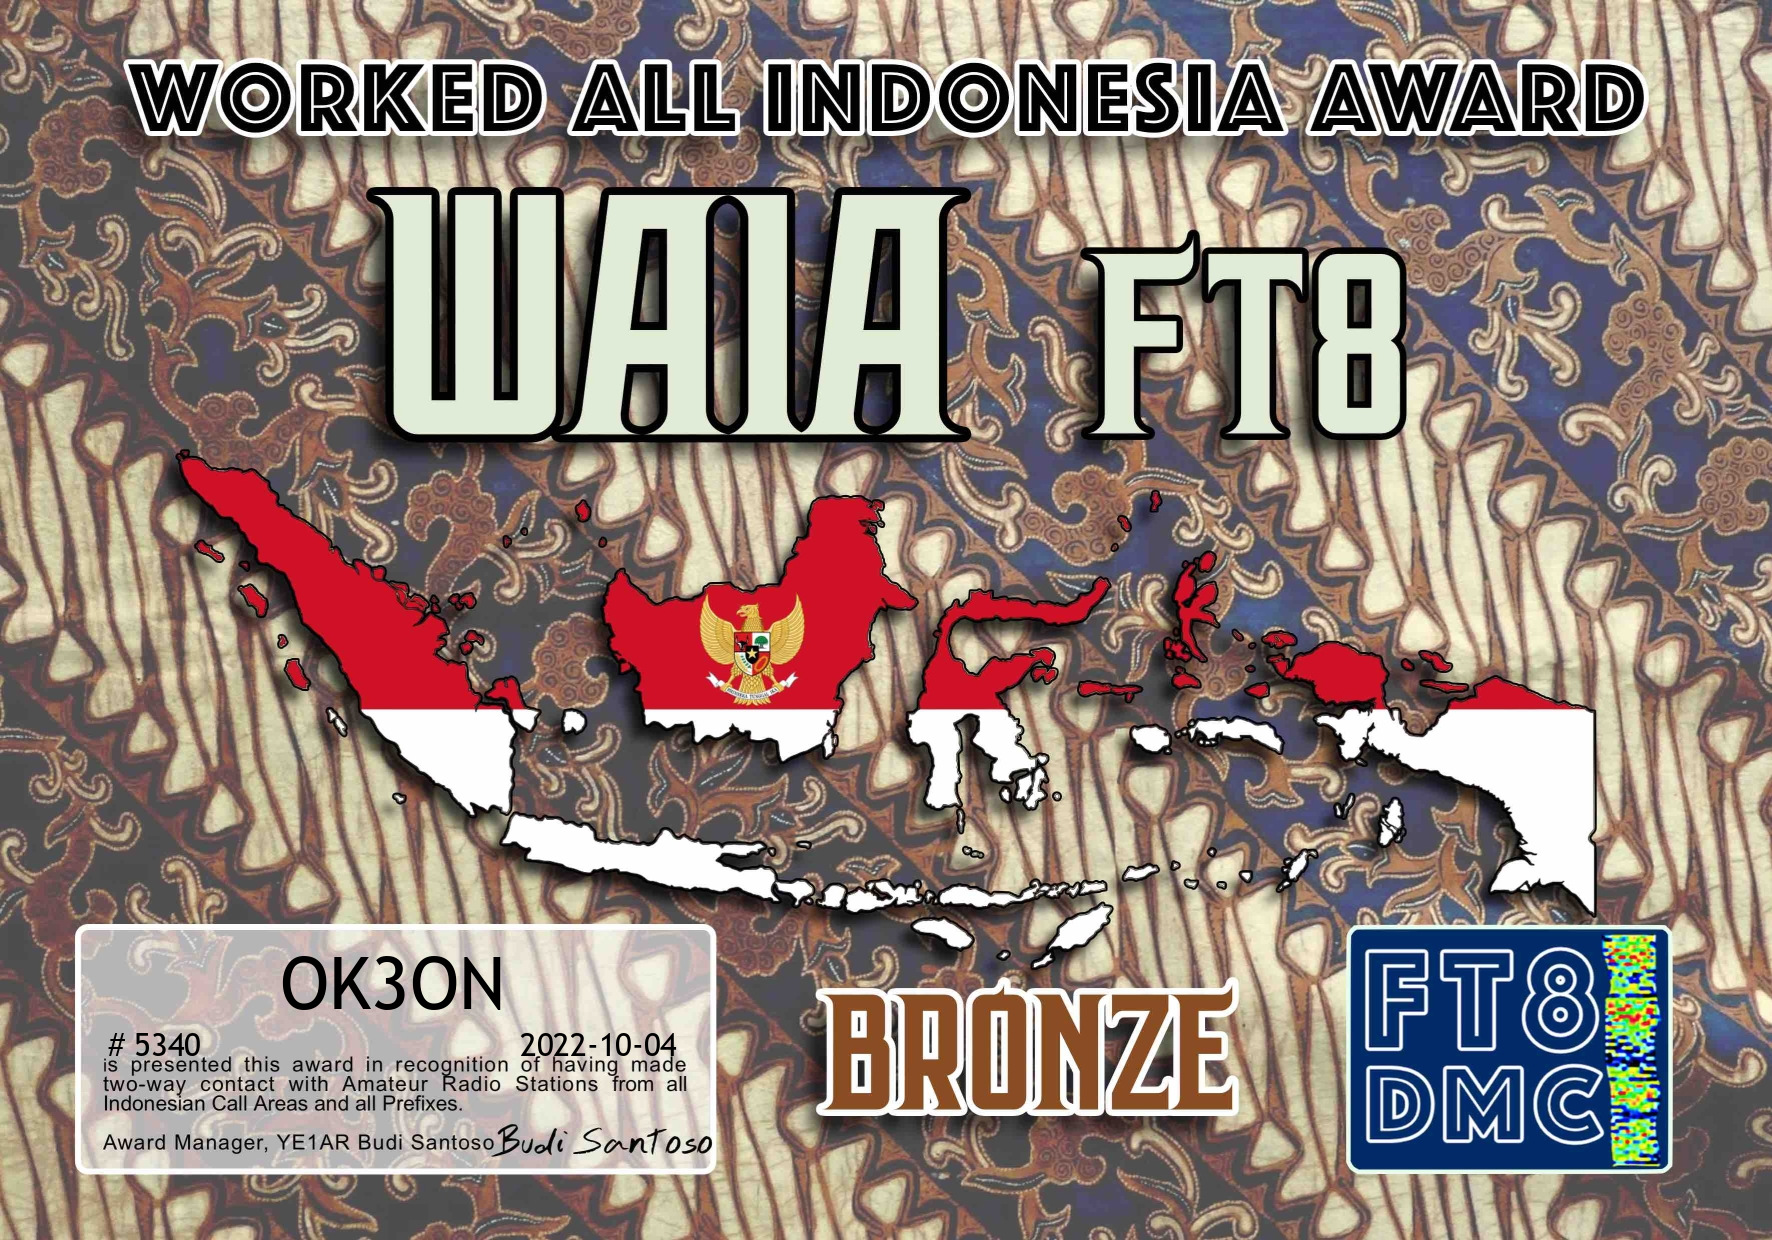 awards/OK3ON-WAIA-BRONZE_FT8DMC.jpg